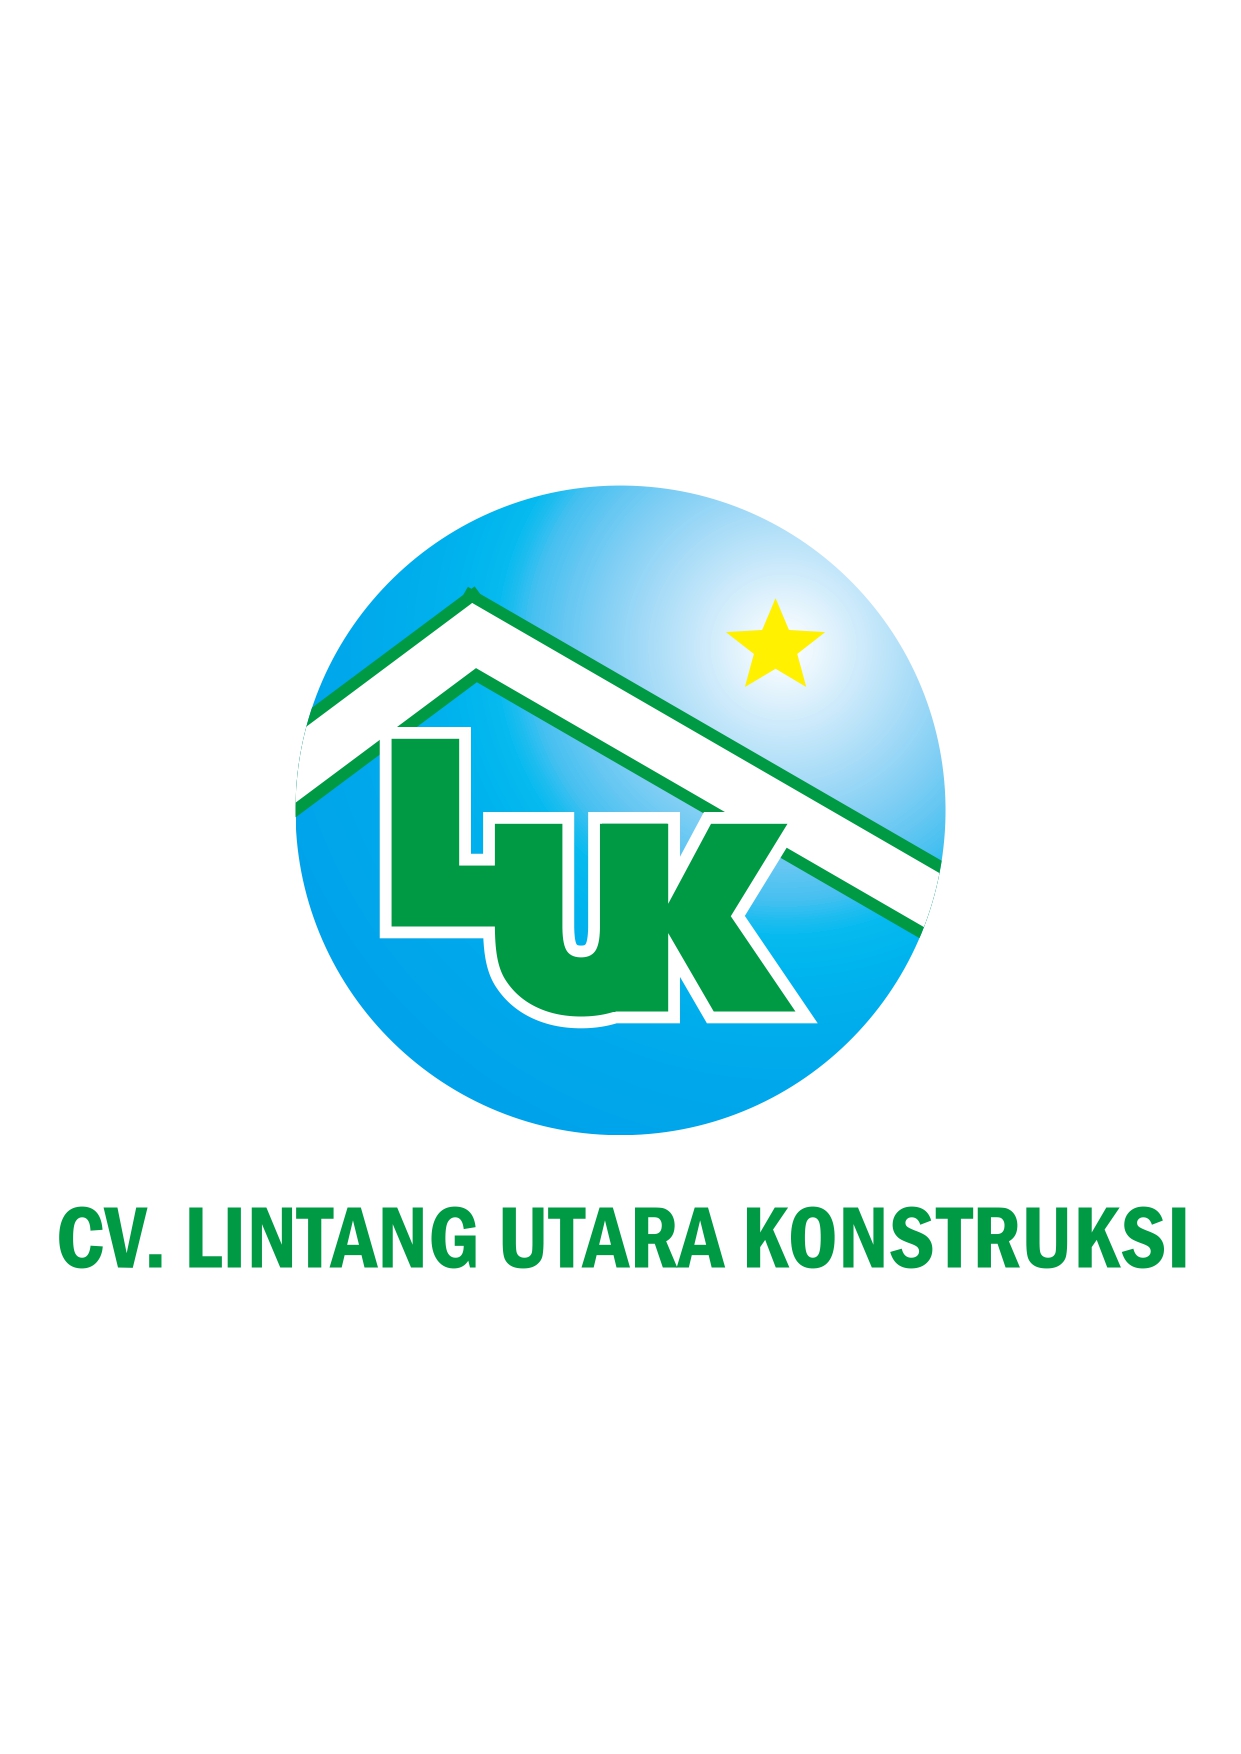 https://dpt.uny.ac.id/upload/profile/359/Logo_CV_lintang_utara_konstruksi.jpg